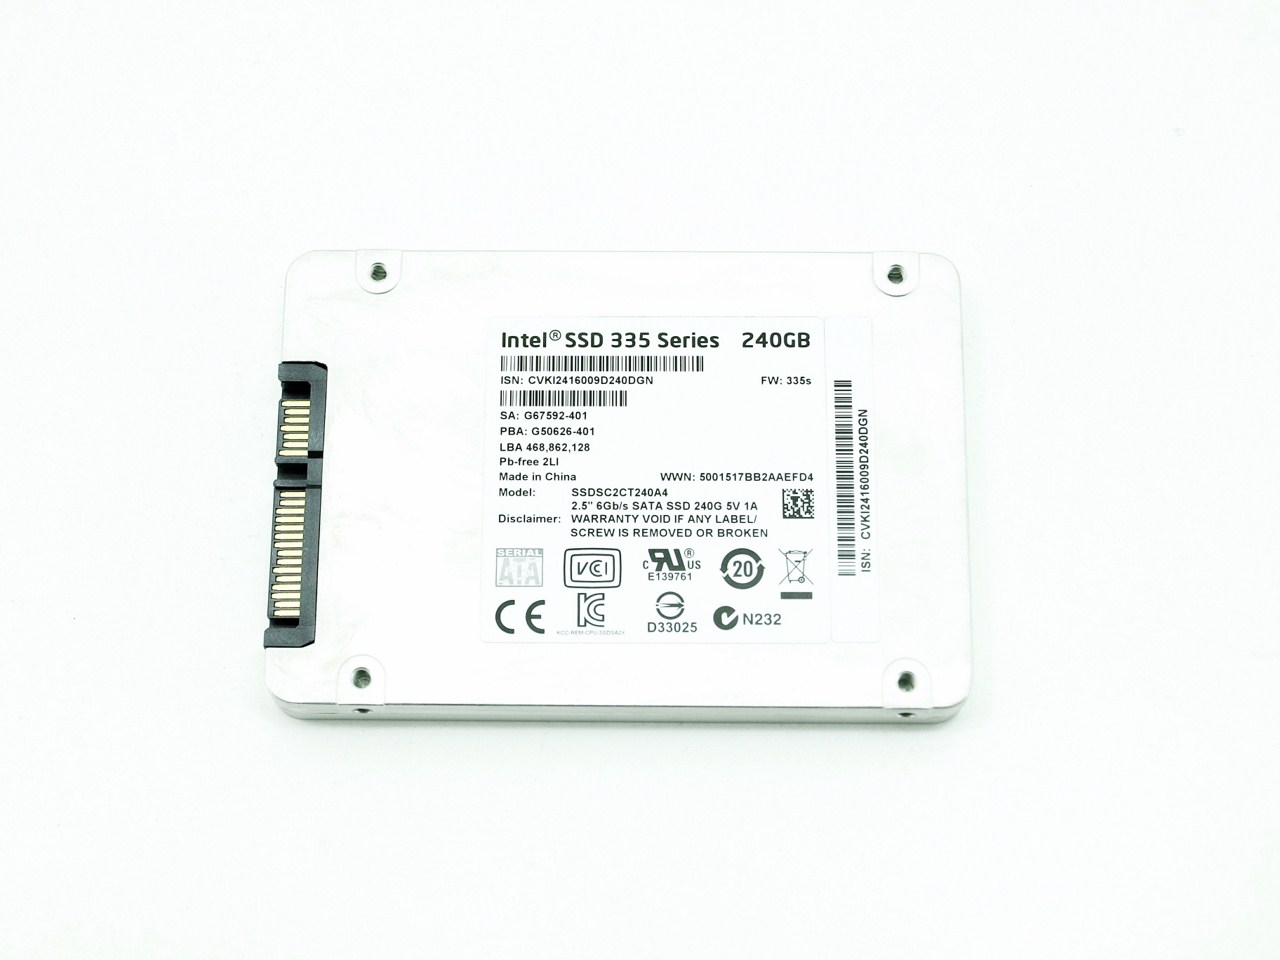 Intel 335 Series 240GB SATA III SSD Review